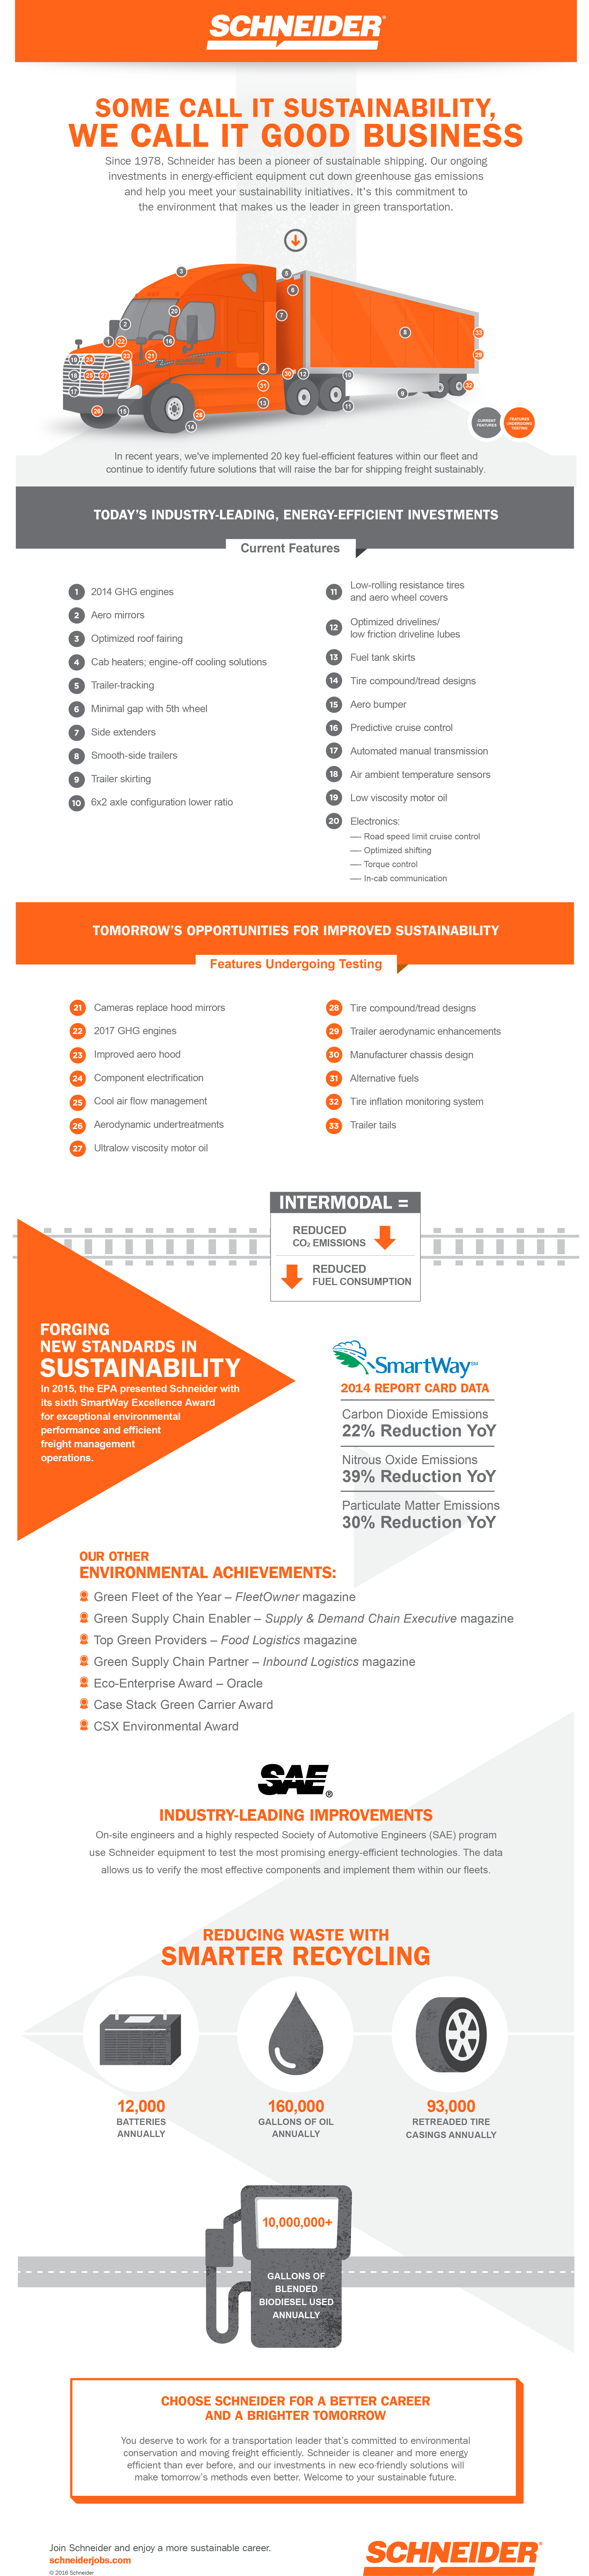 An infographic illustrates Schneider's sustainability efforts.